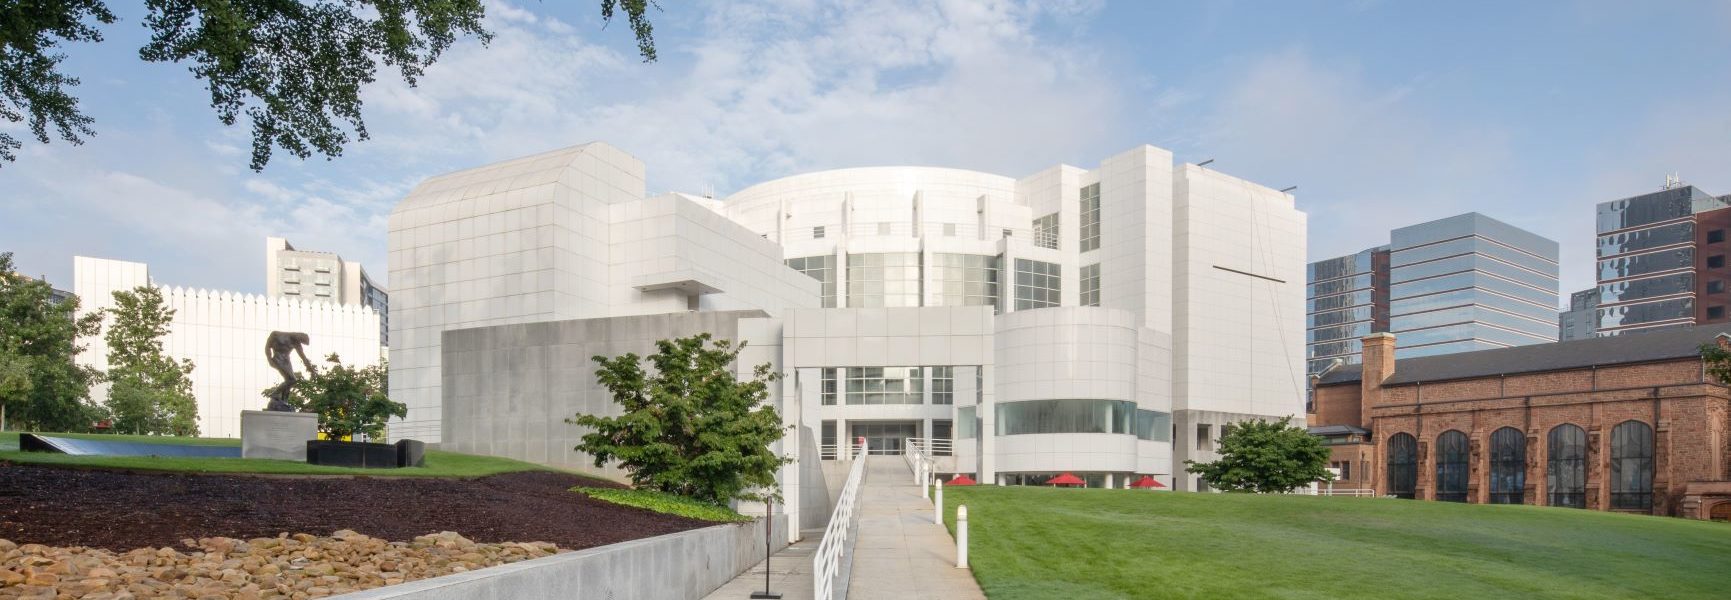 The High Museum of Art's iconic white Richard Meier Building